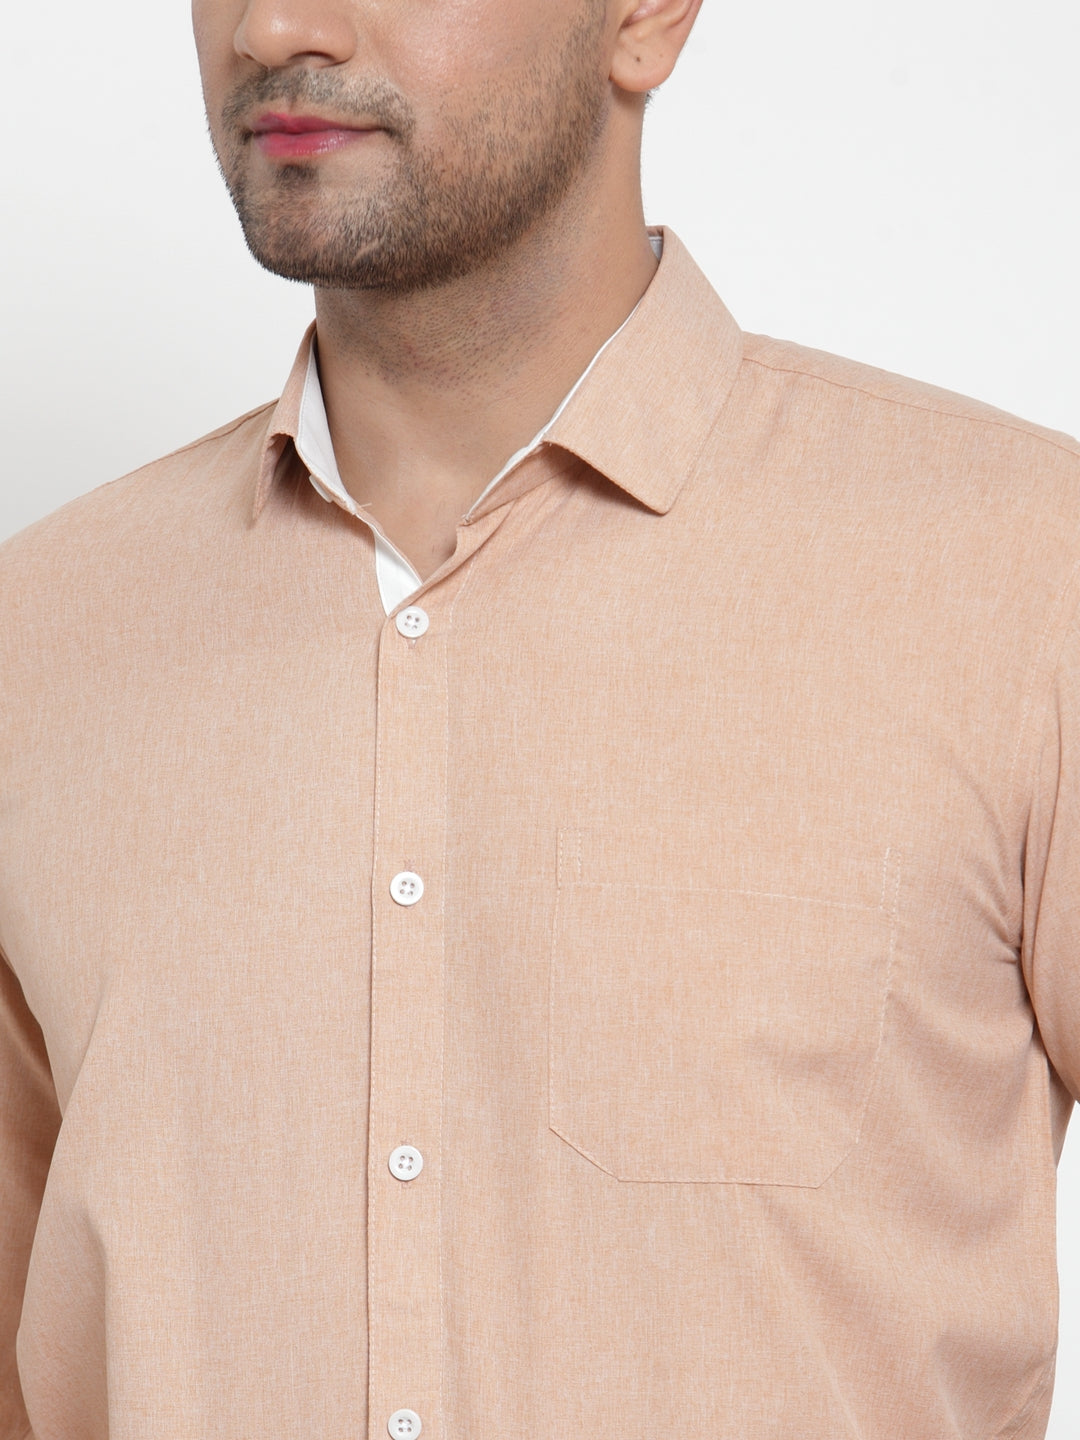 Men's Light-Brown Formal Shirt with white detailing ( SF 419Light-Brown ) - Jainish